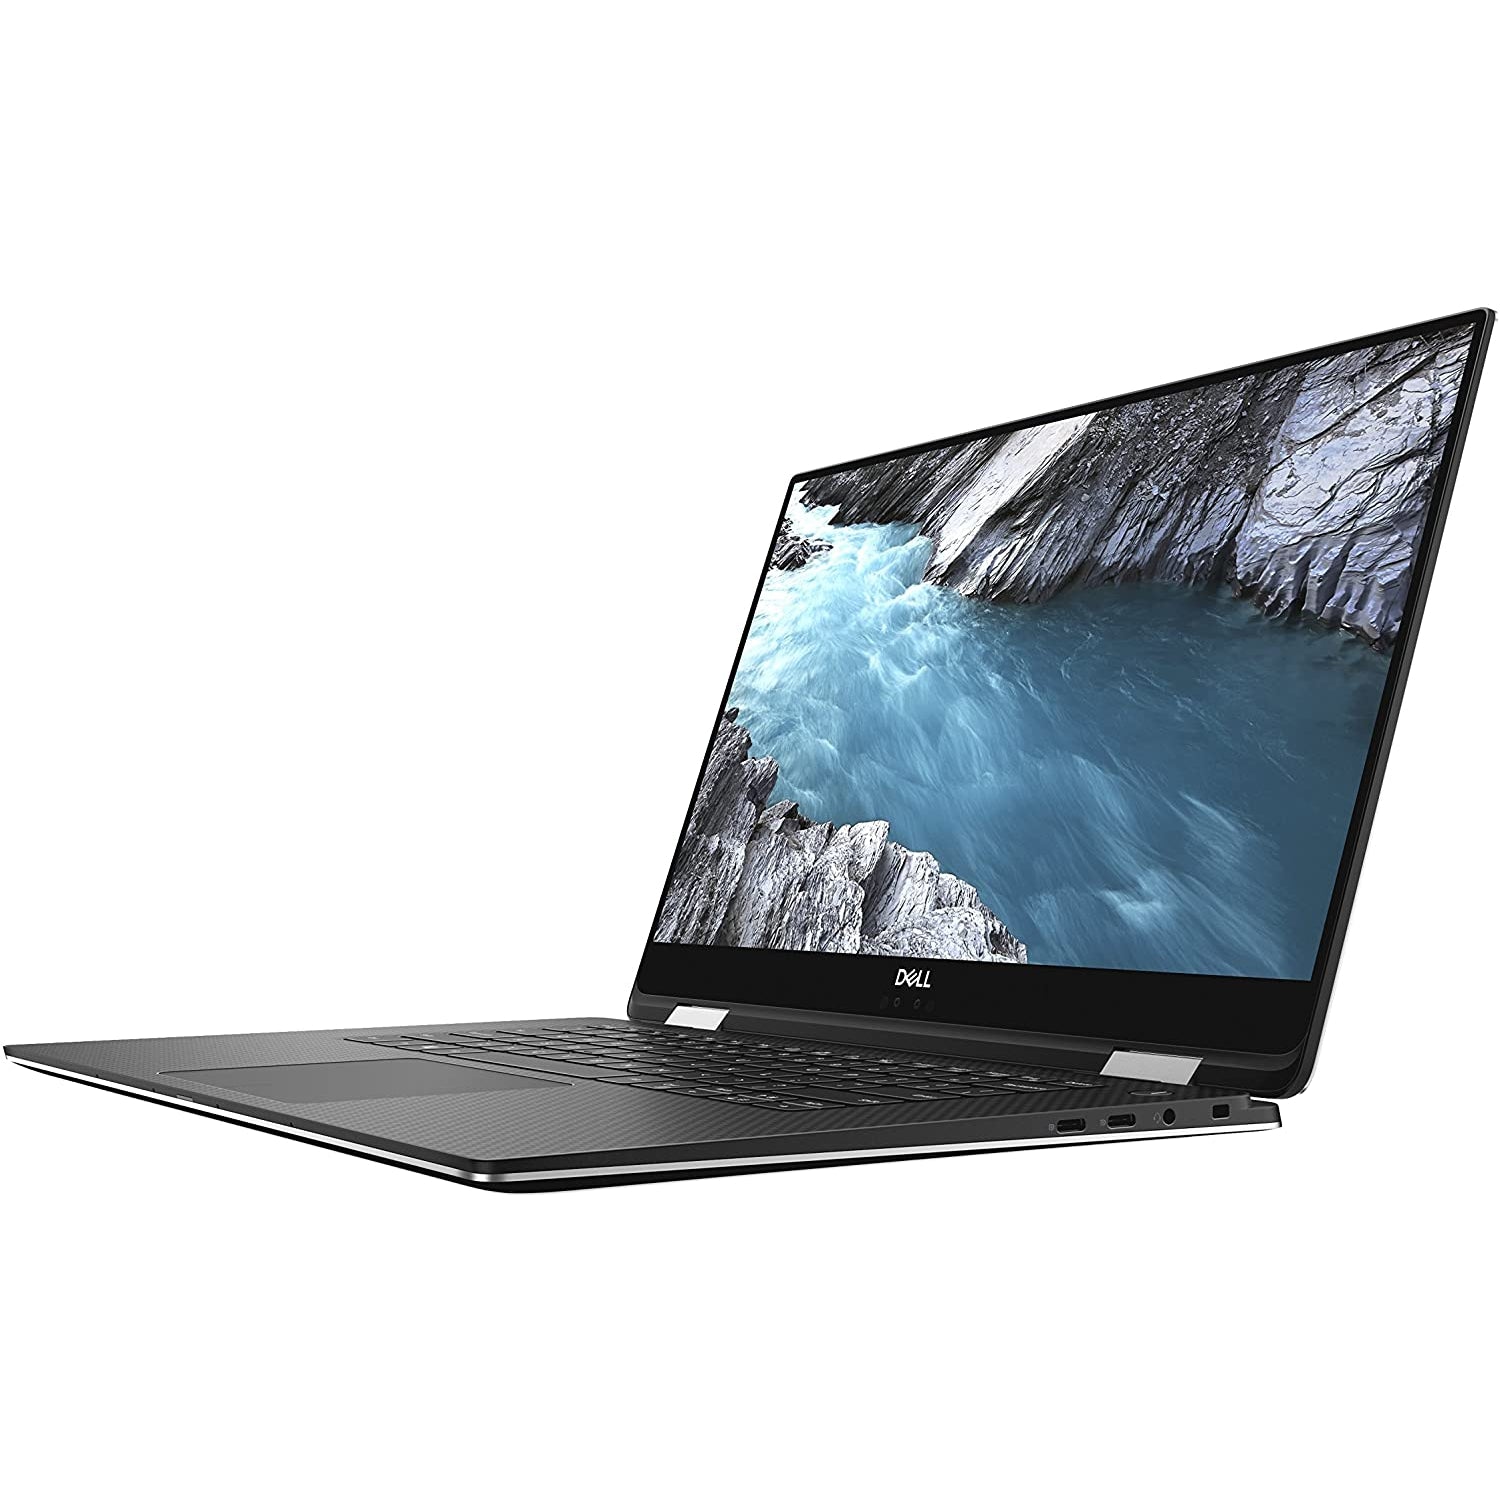 Dell XPS 15 9575 15.6" Touchscreen Laptop, Intel Core i7 8th Gen, 512GB SSD, 16GB RAM, Silver